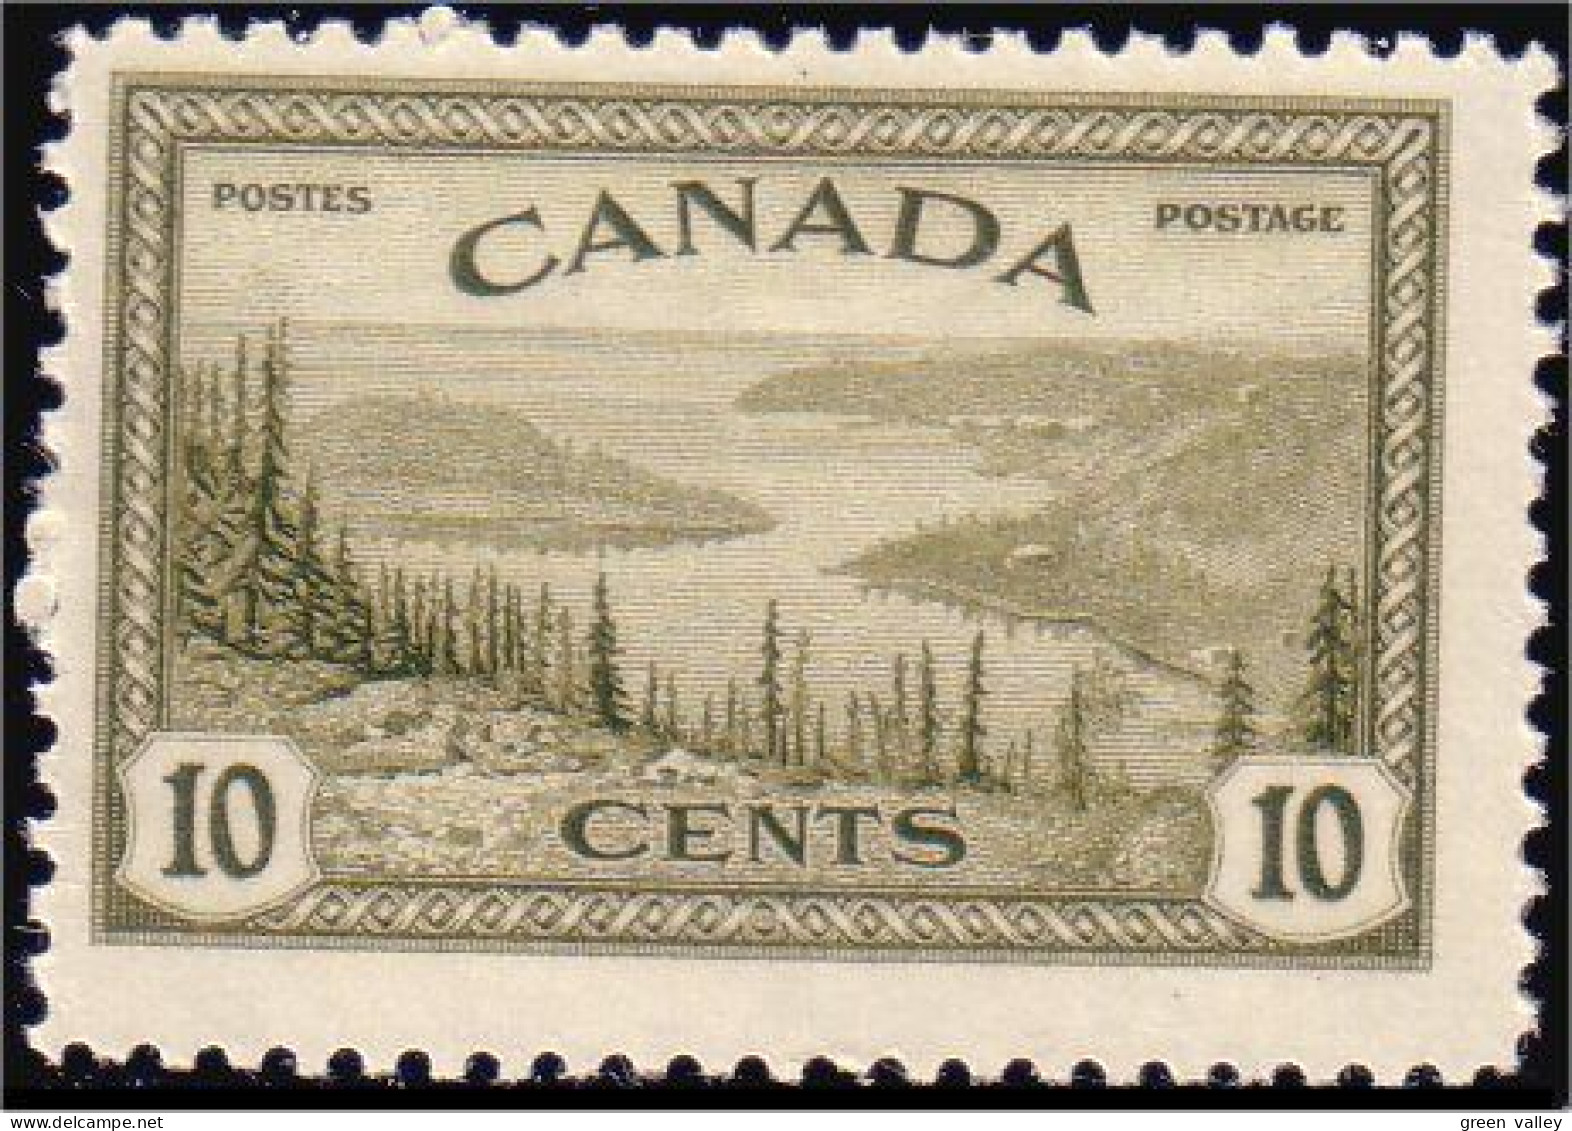 951 Canada 1946 Great Bear Lake MNH ** Neuf SC (33) - Neufs